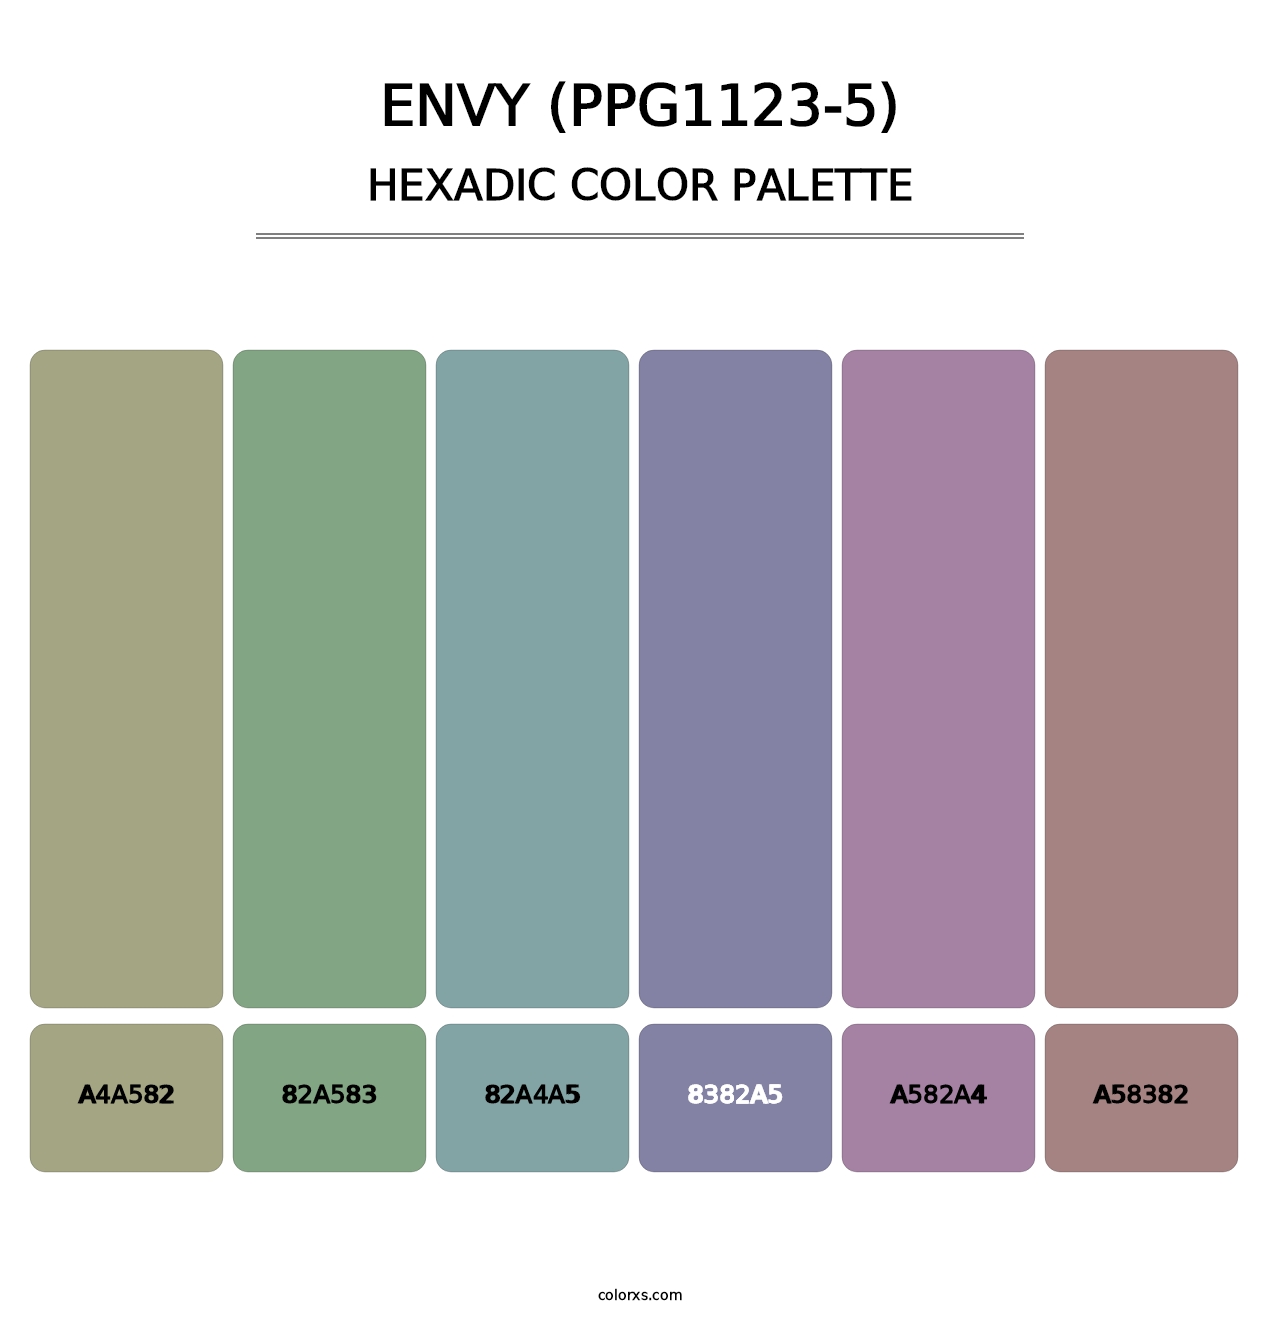 Envy (PPG1123-5) - Hexadic Color Palette